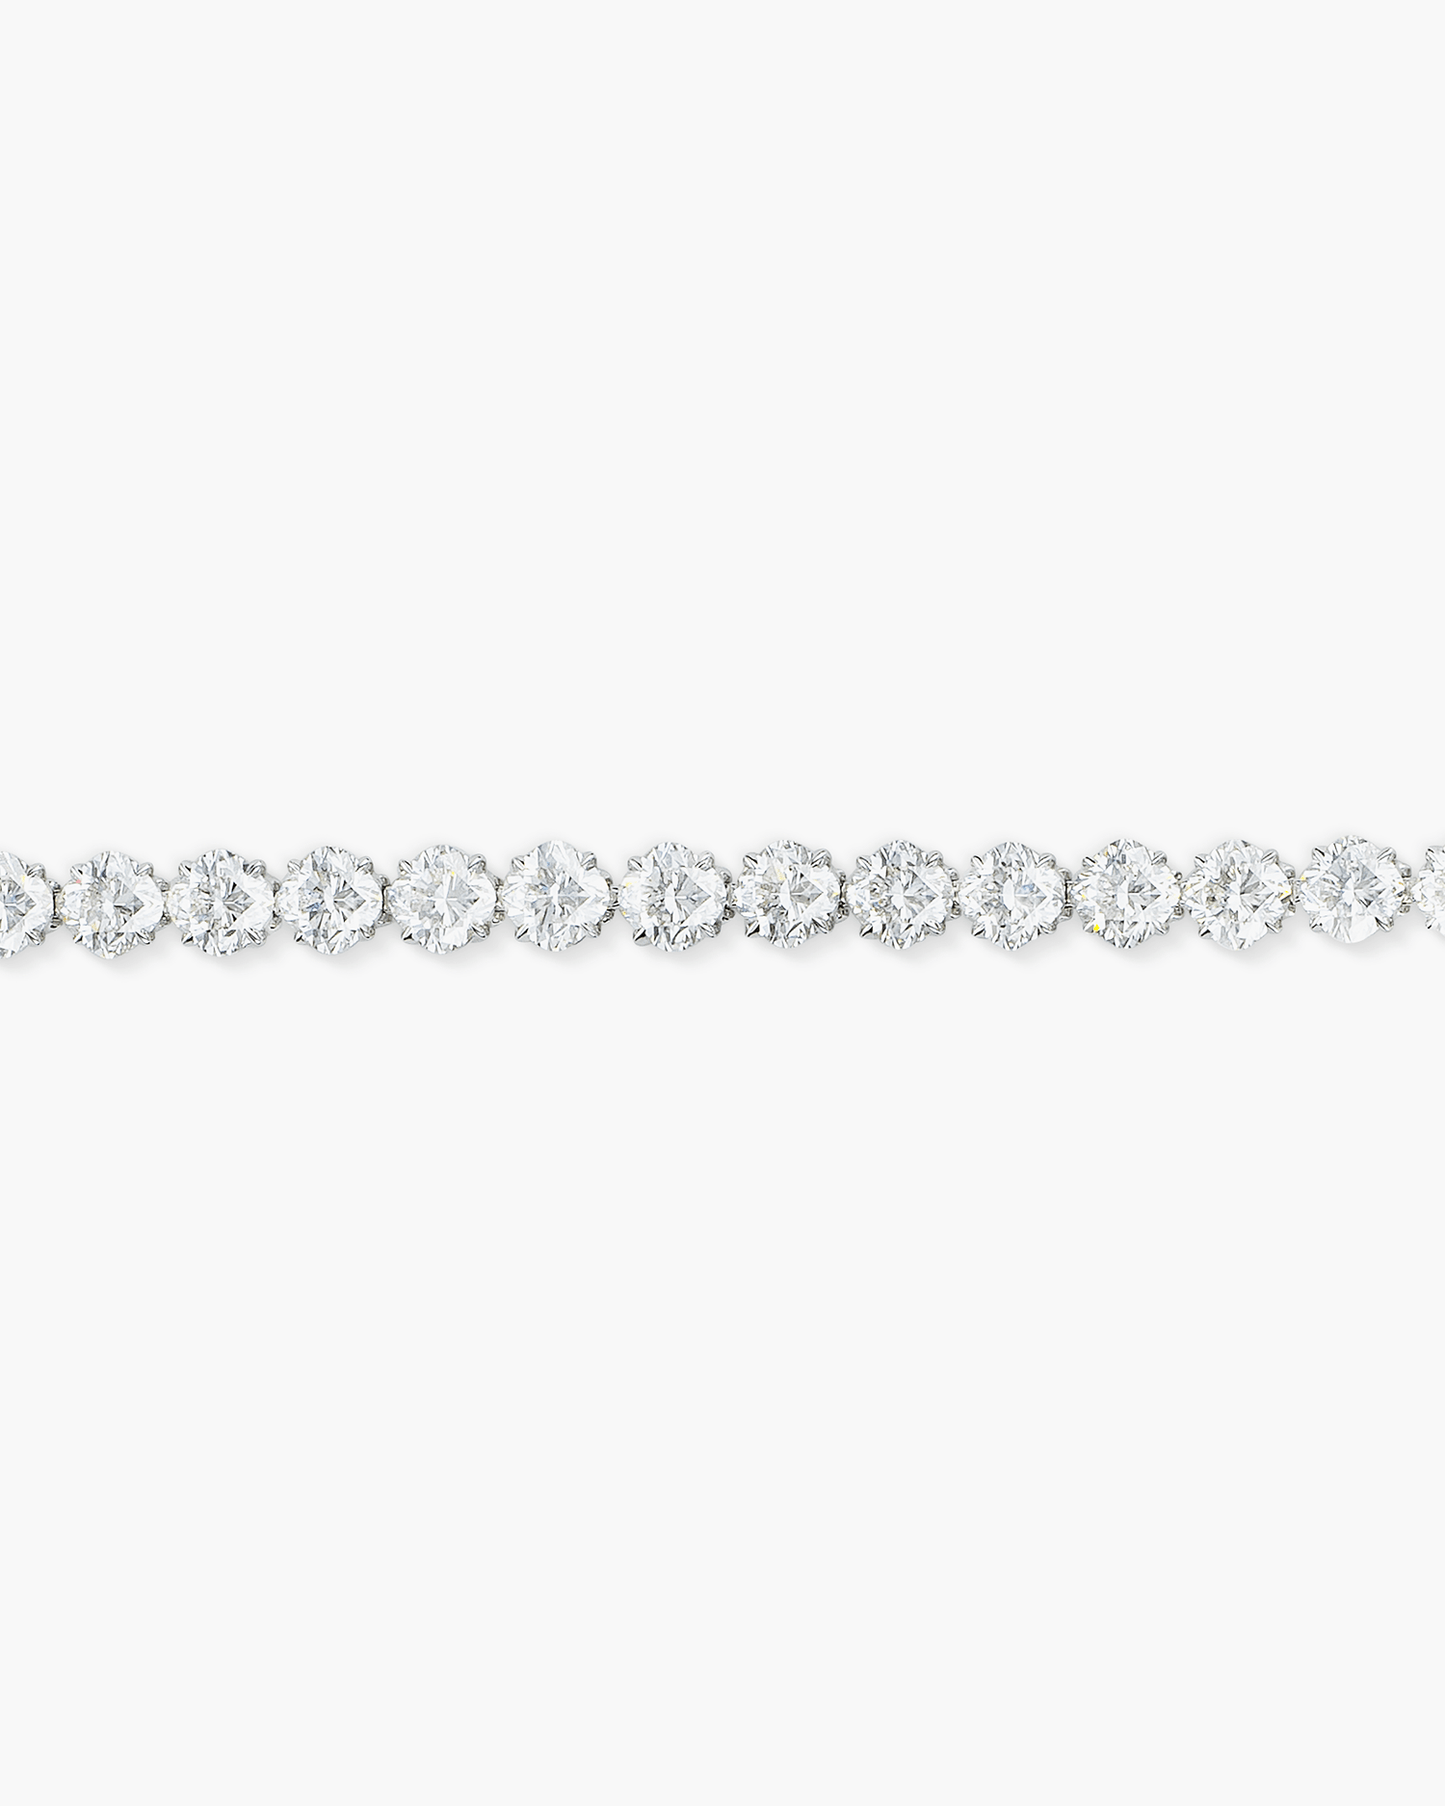 11.86 carat Cushion Cut Diamond Bracelet (0.30 carat)